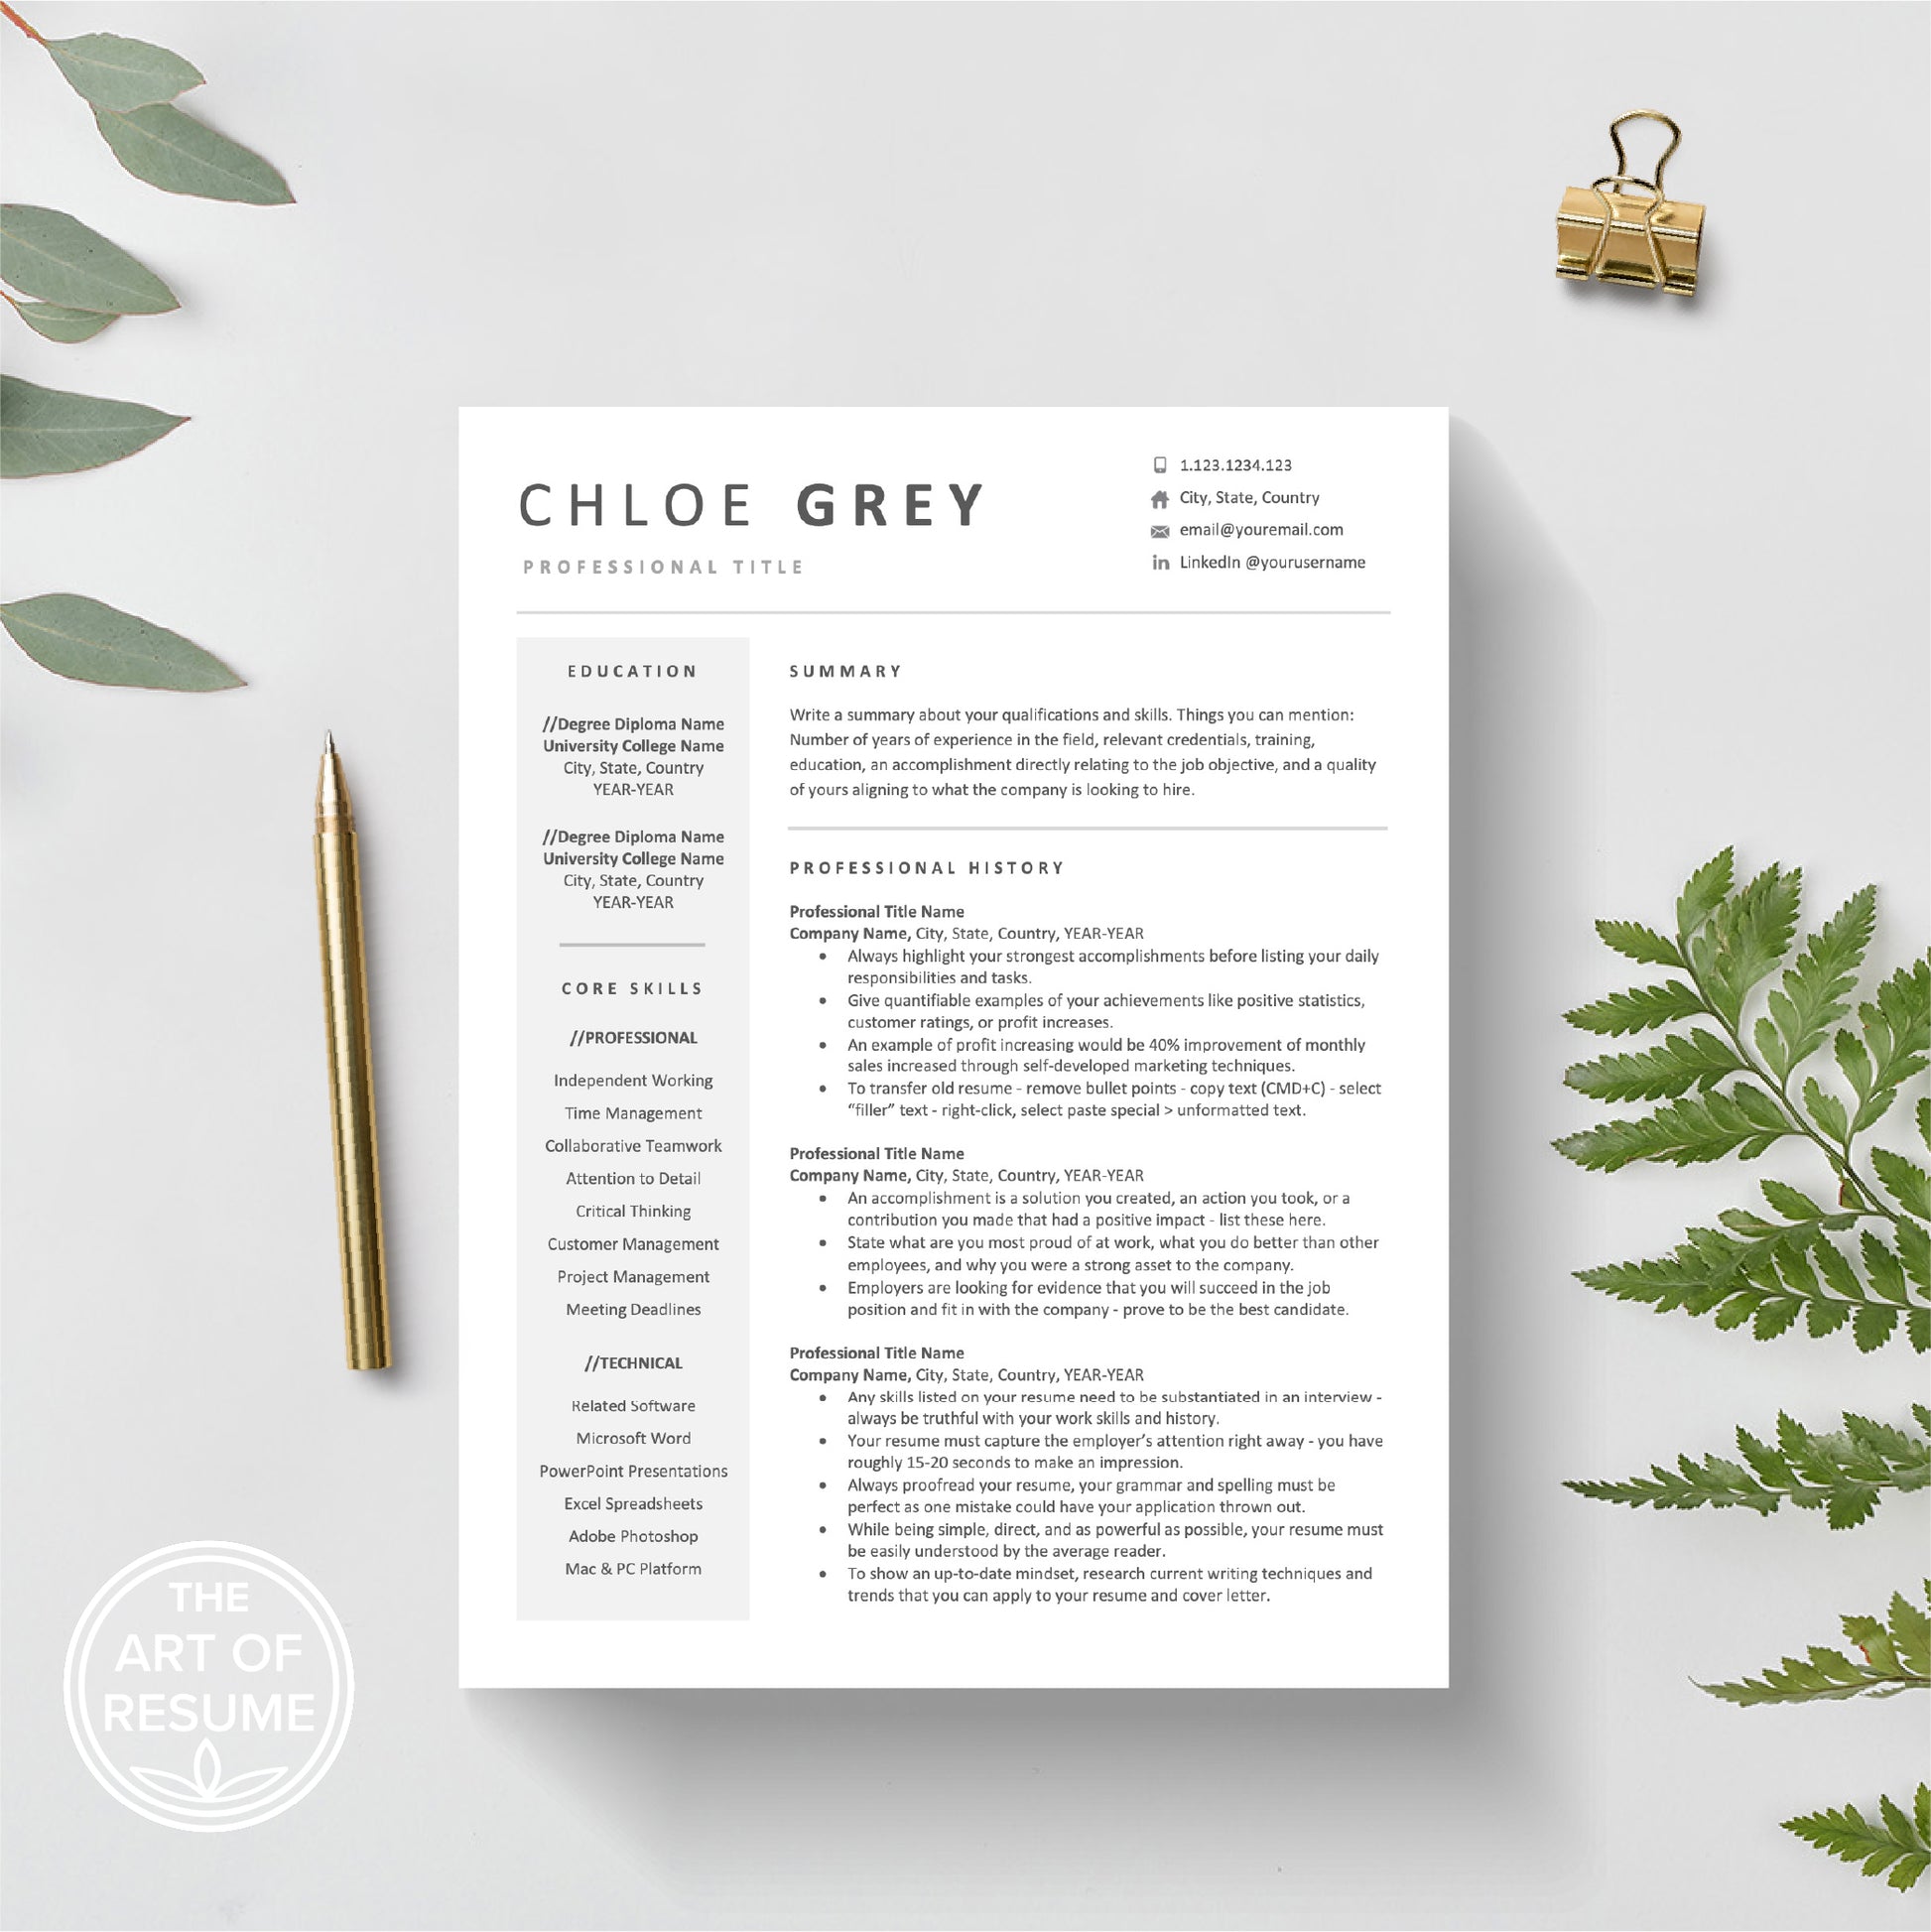 The Art of Resume | Professional Minimalist Resume CV Template Design Bundle